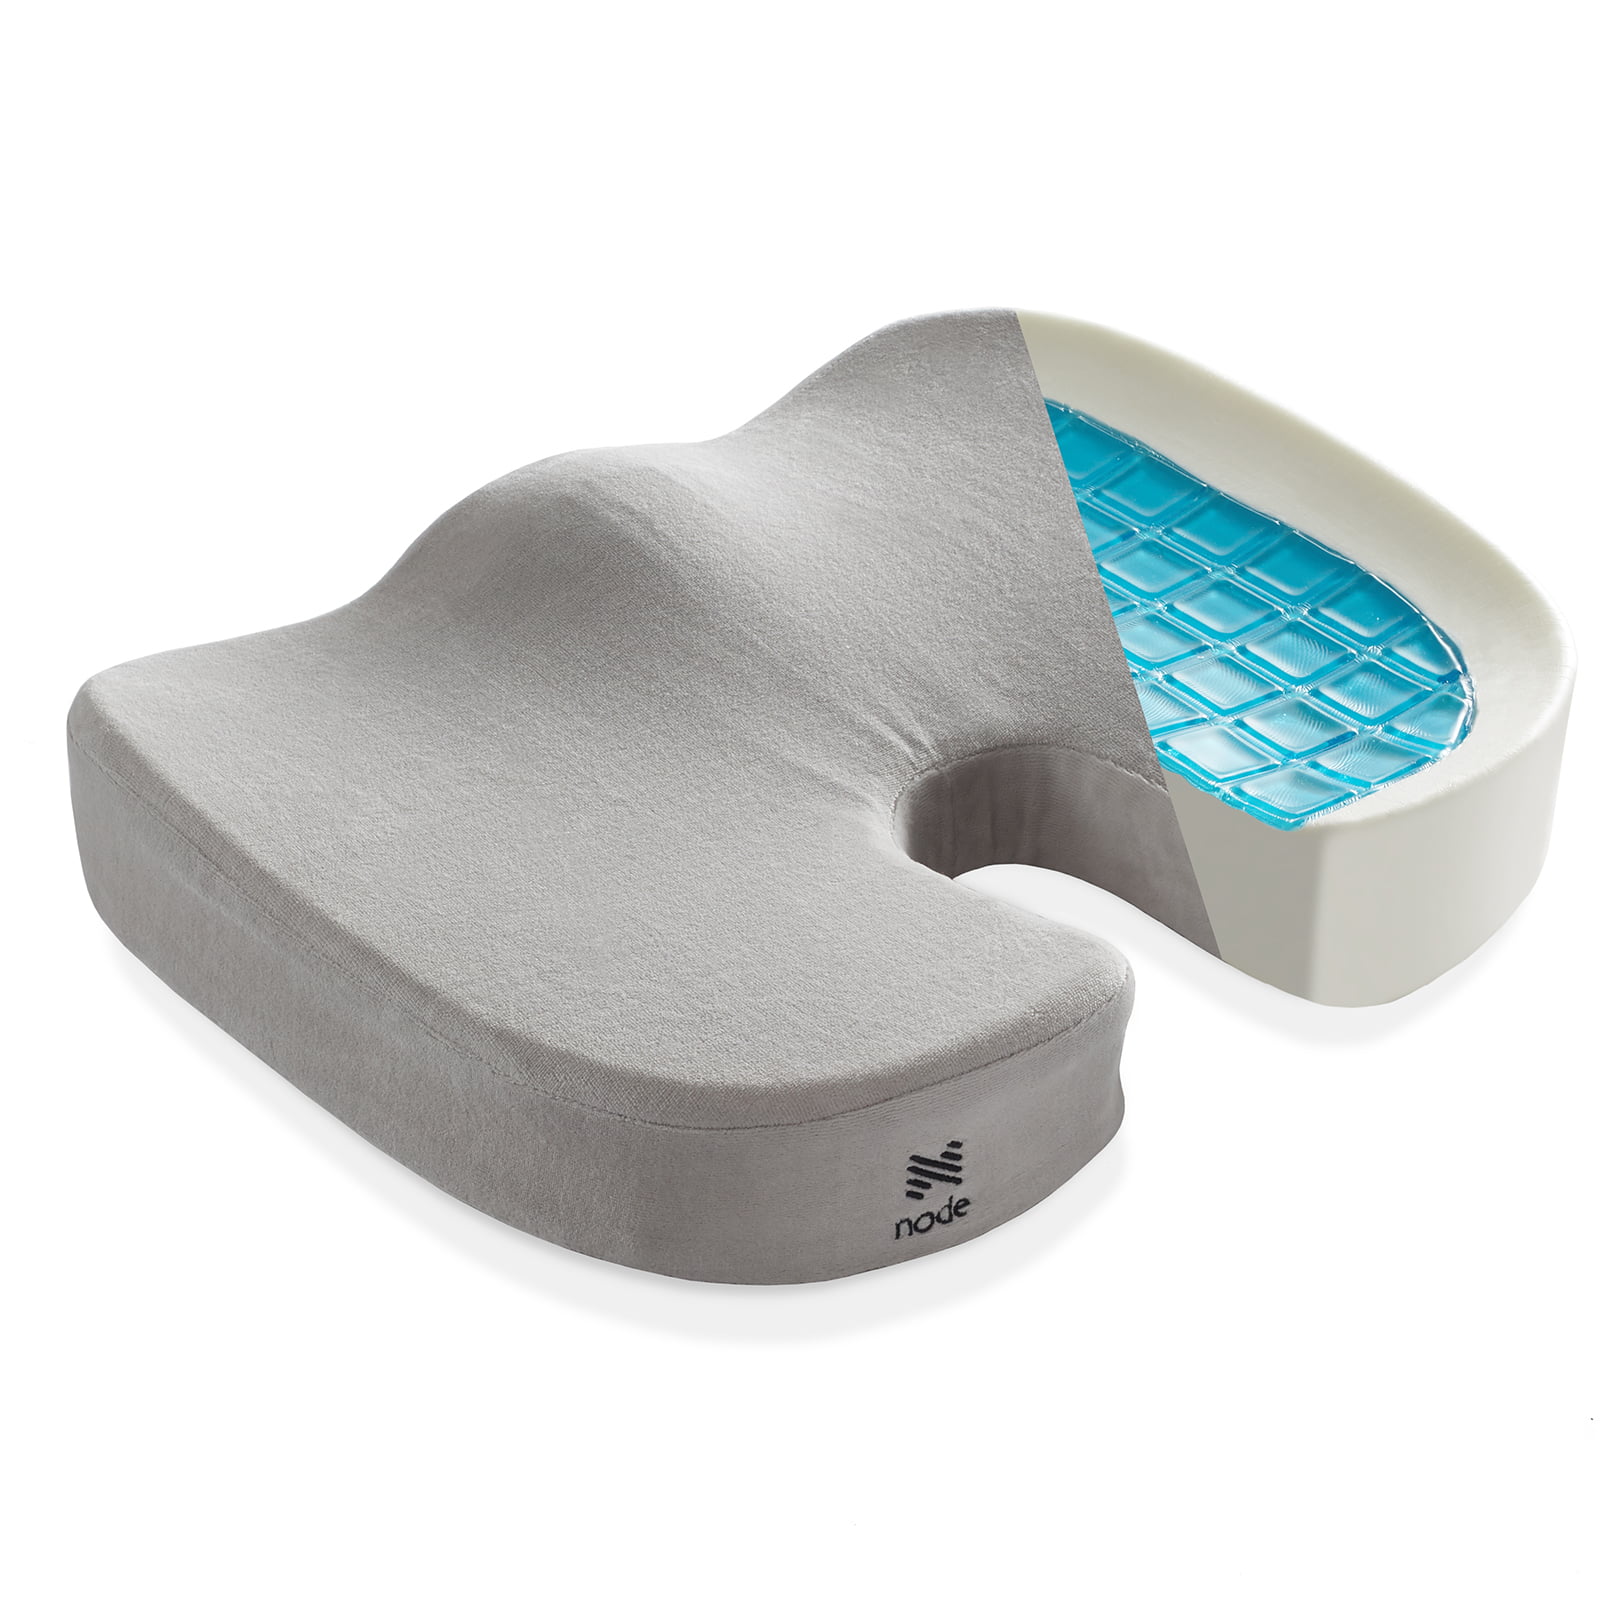 Node Gel Enhanced Memory Foam Seat Cushion Gray Velour Ergonomic Orthopedic Comfort Pad Ideal